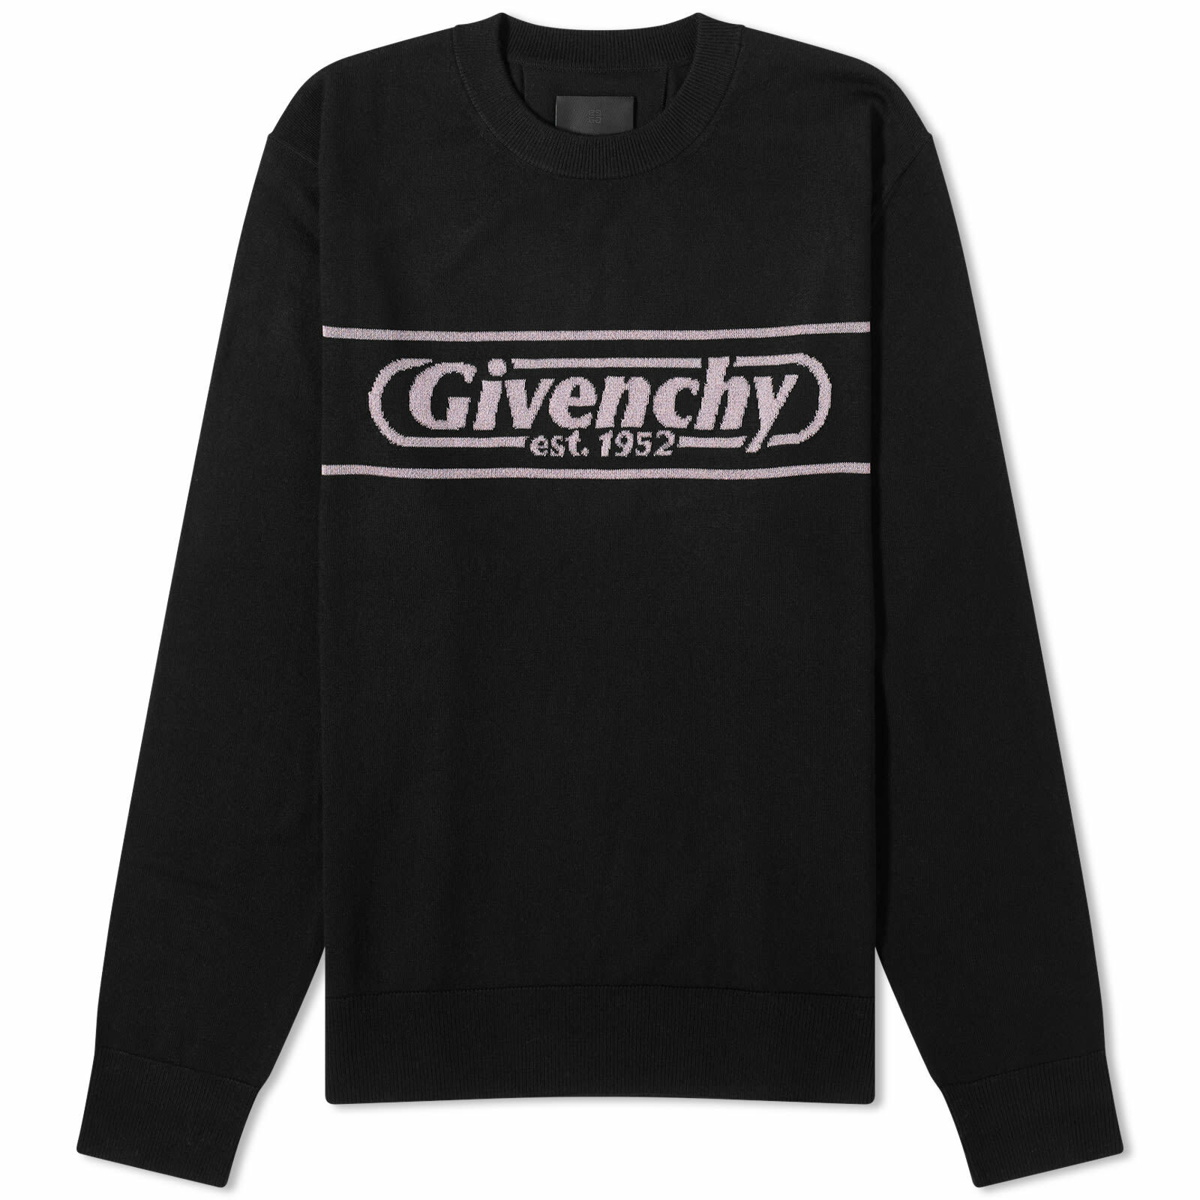 Givenchy Men's Est.1952 Logo Merino Crew Knit in Black/Pink Givenchy